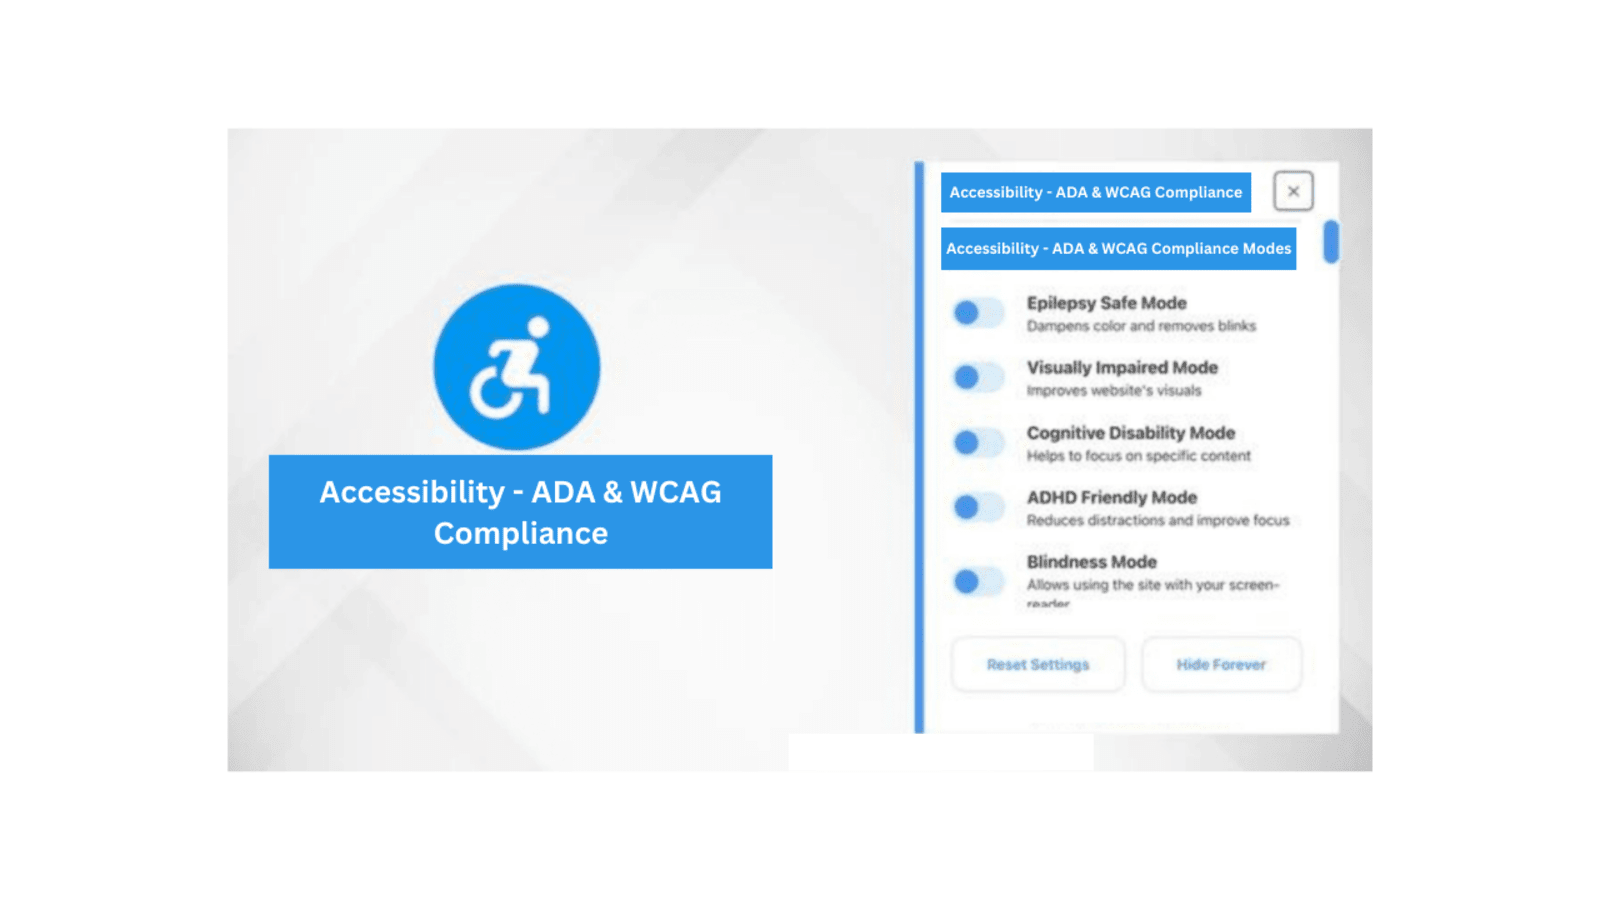 Accessibility - ADA & WCAG Compliance